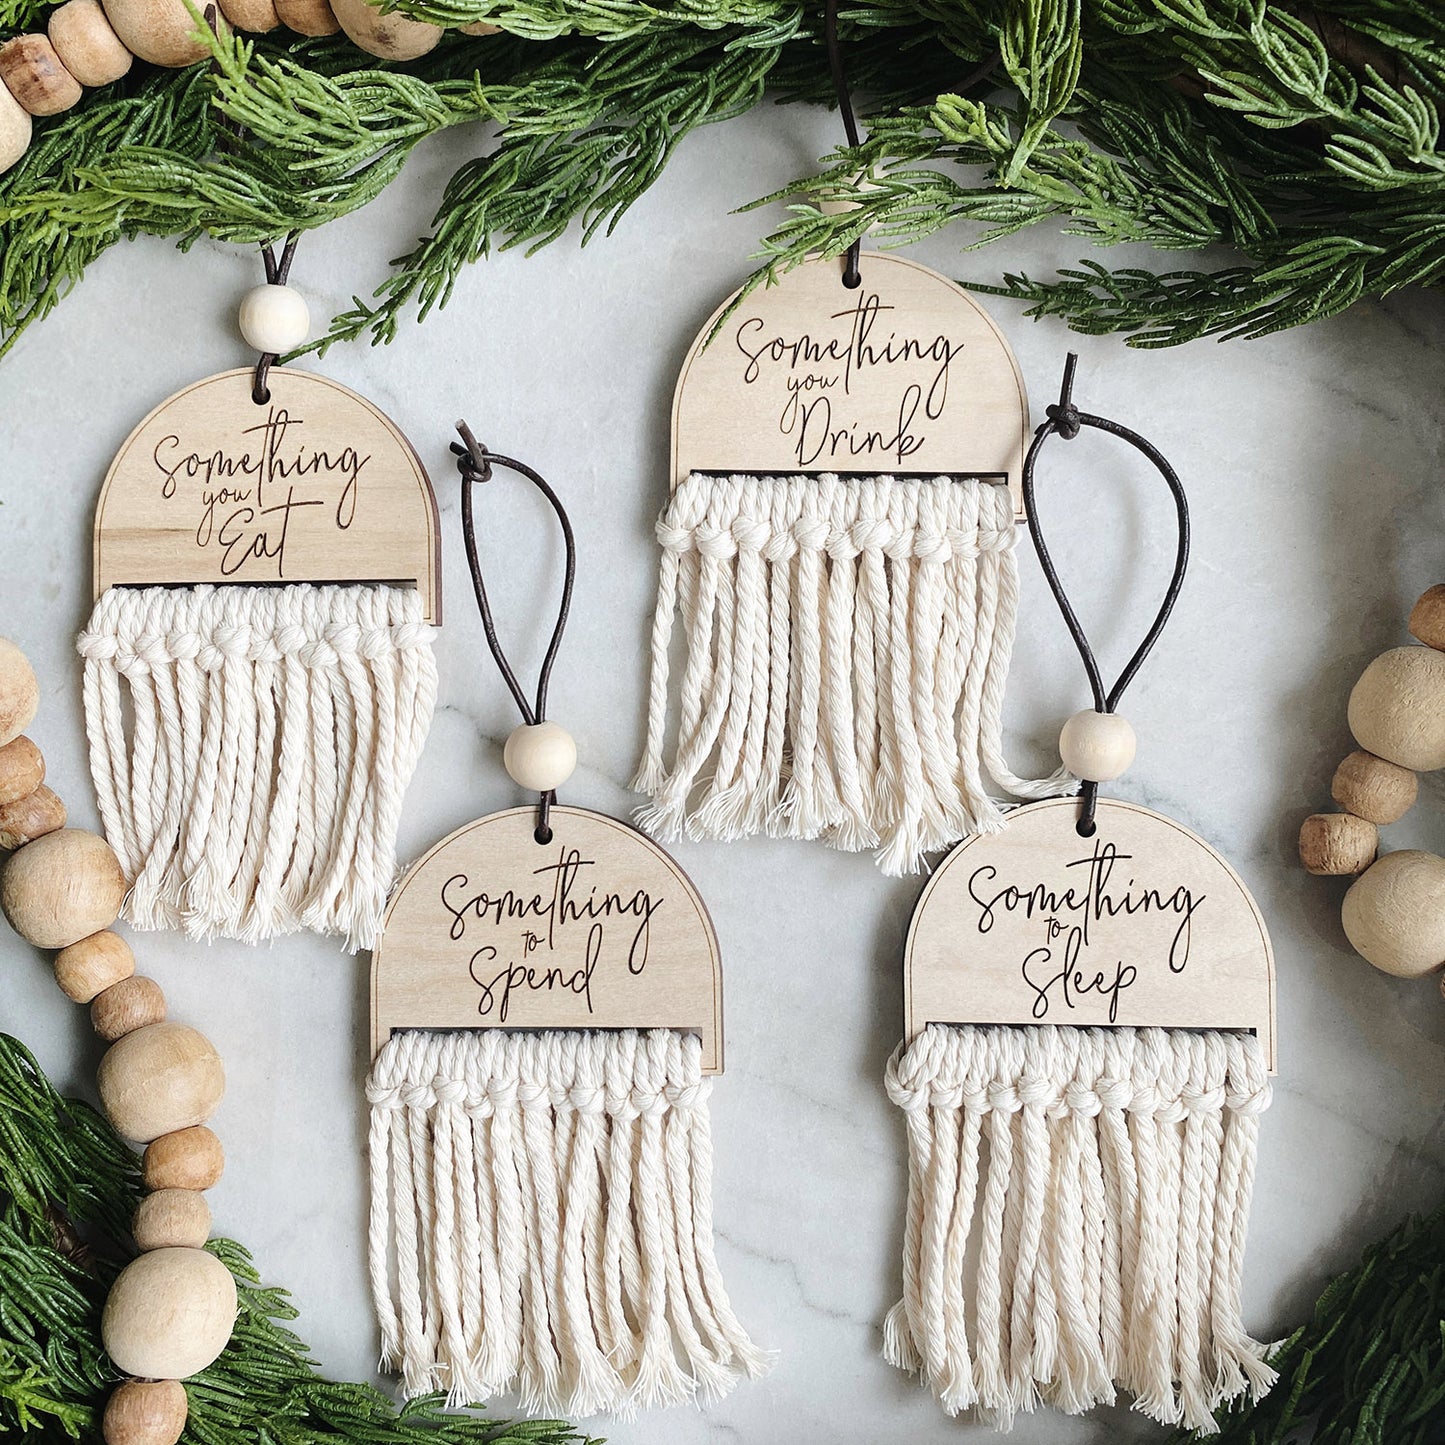 Macrame Boho Style Gift Tags / Christmas Stocking Tags - Eat, Drink, Spend, Sleep  (Set of 8)